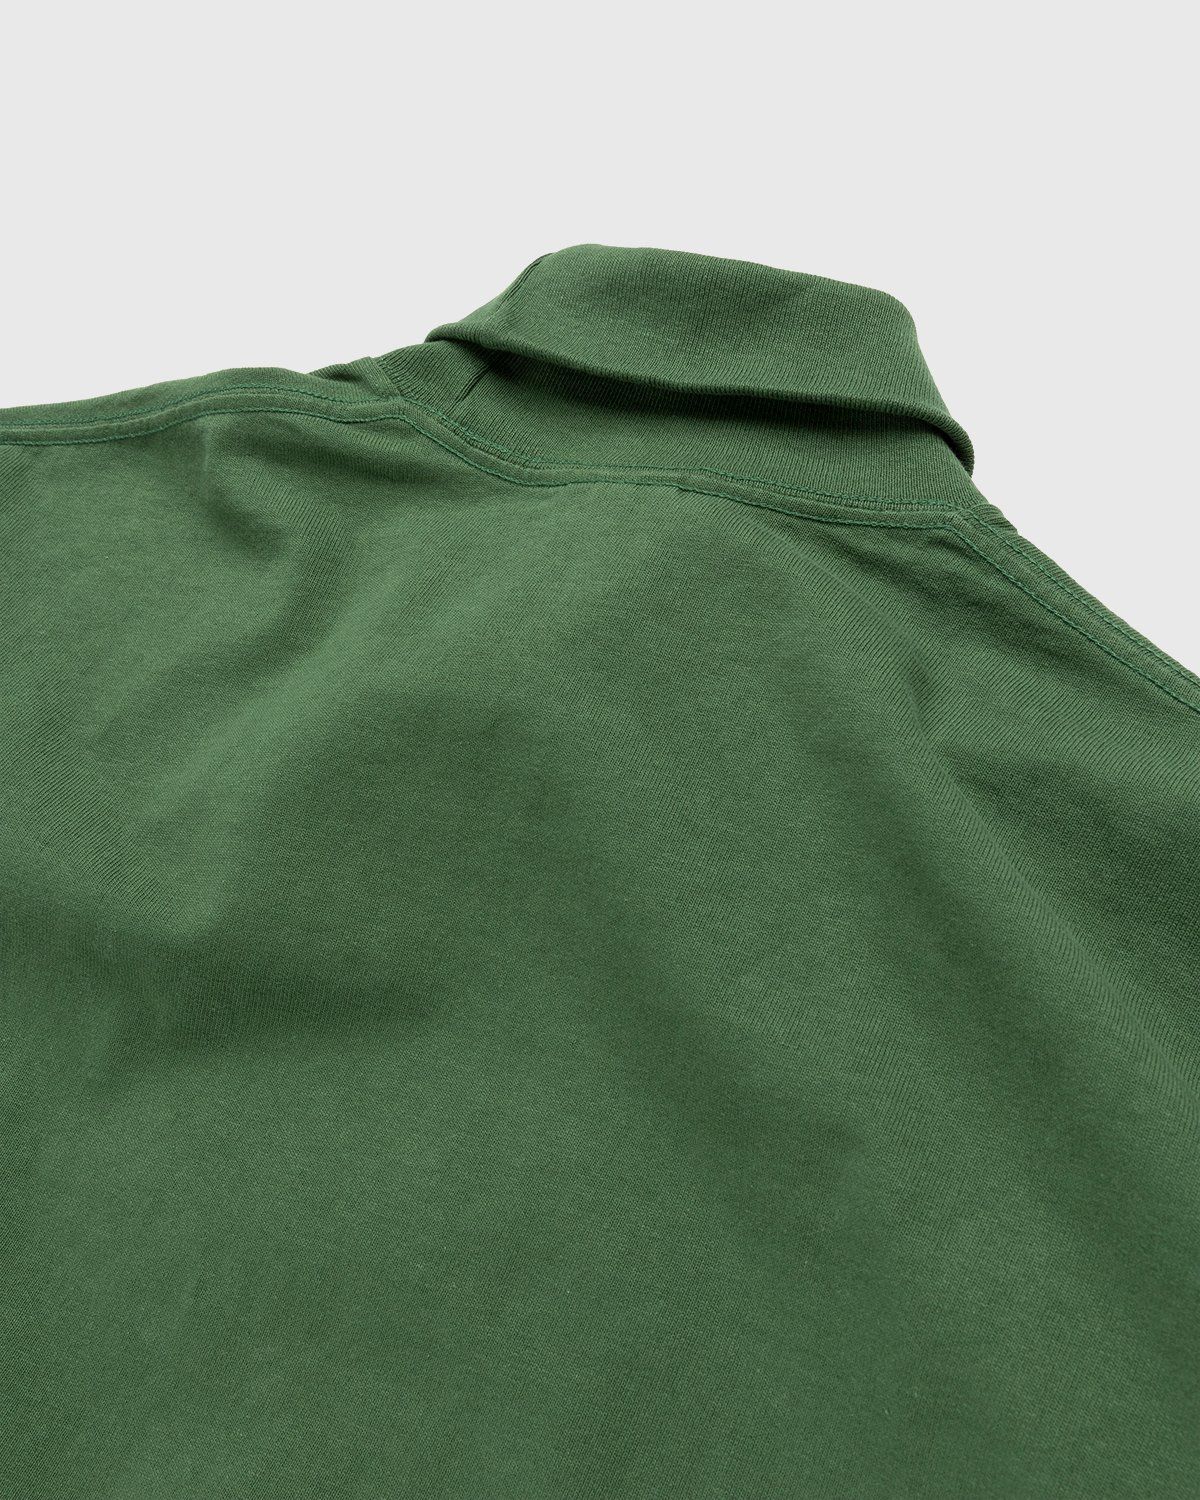 Highsnobiety – Heavy Staples Turtleneck Green - Sweatshirts - Green - Image 3